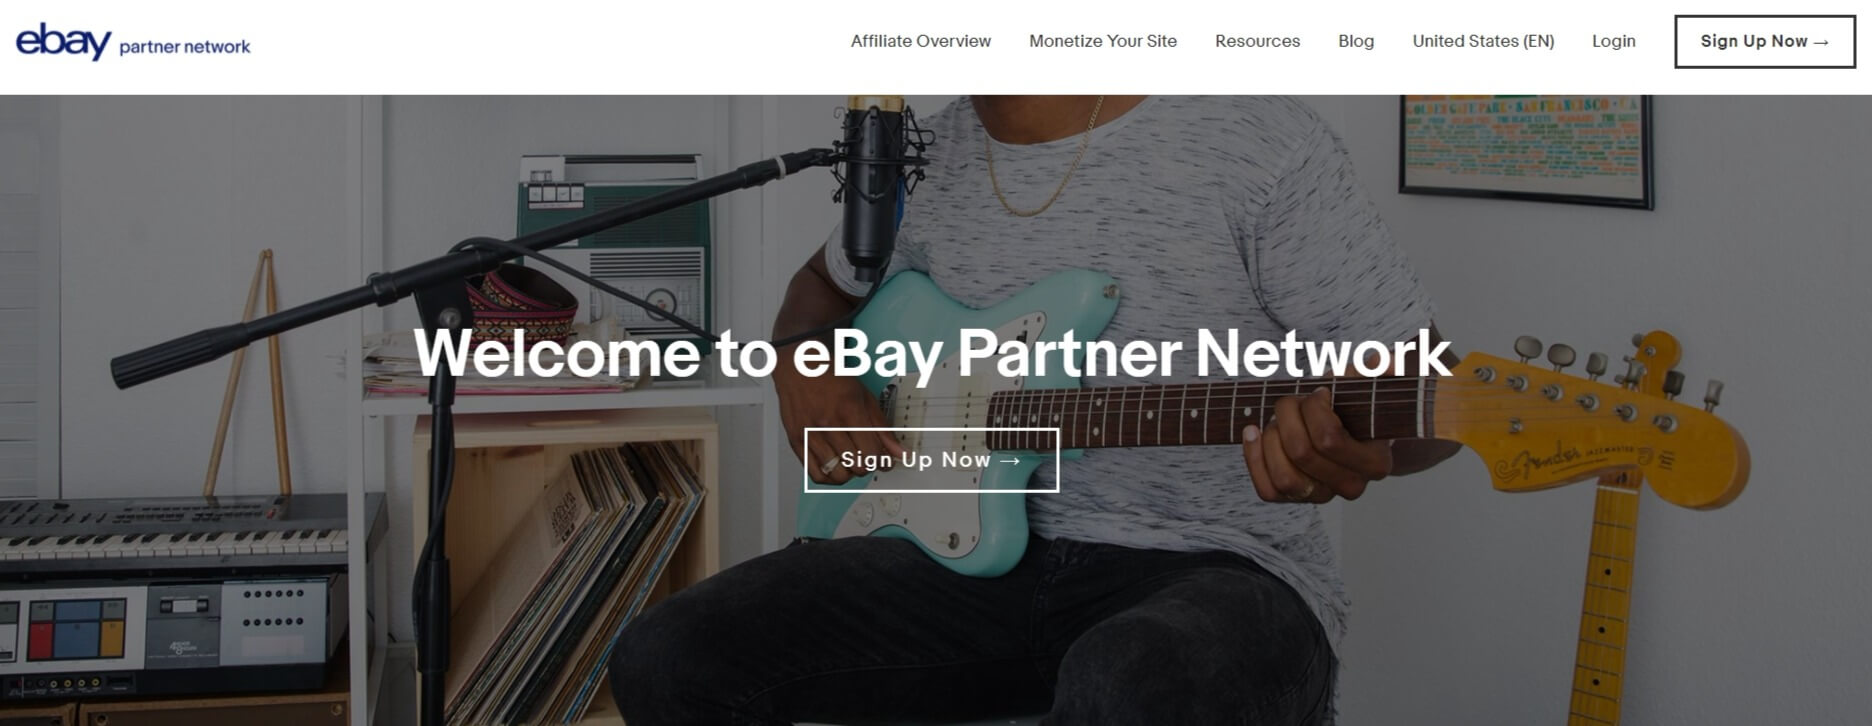 The eBay Partner Network homepage